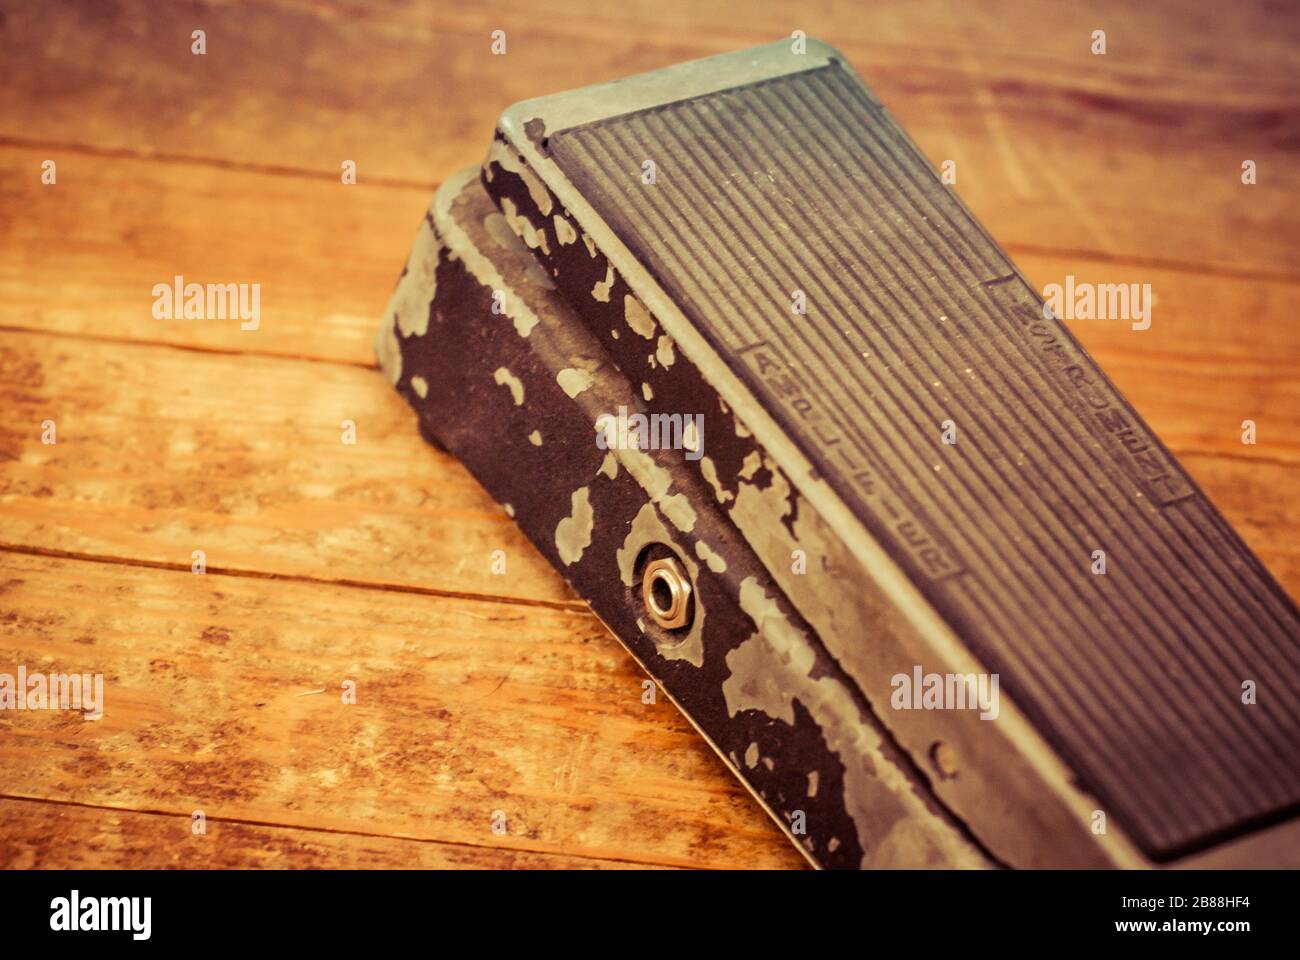 Guitar Wah Wah Pedal on a Dirty Hard Wood Floor. Stock Photo